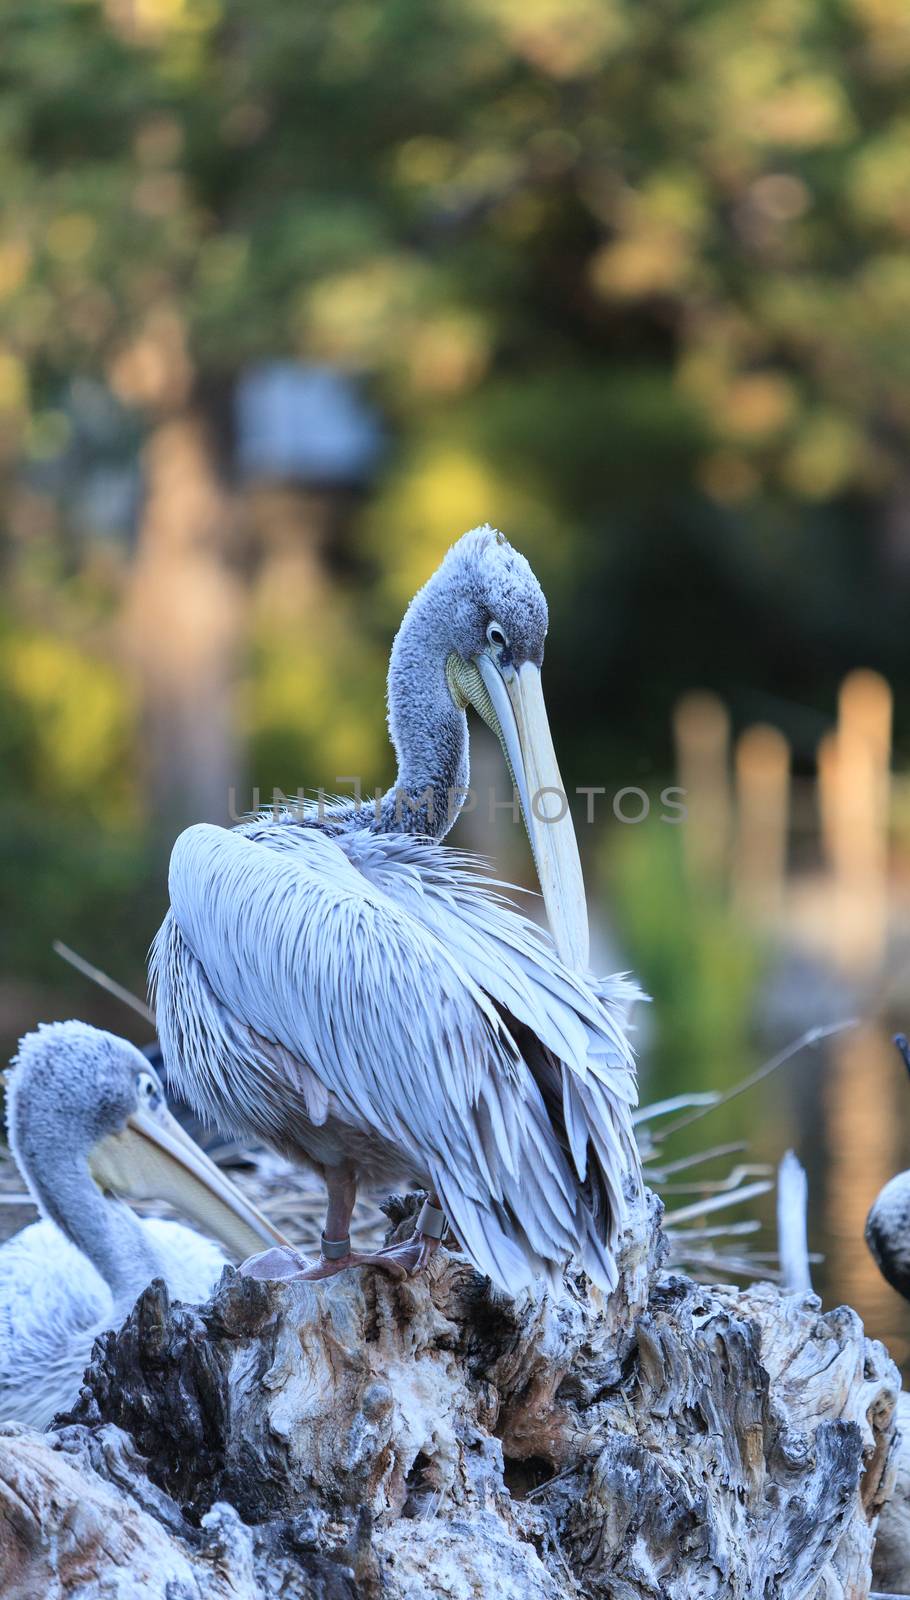 Great white pelican by steffstarr